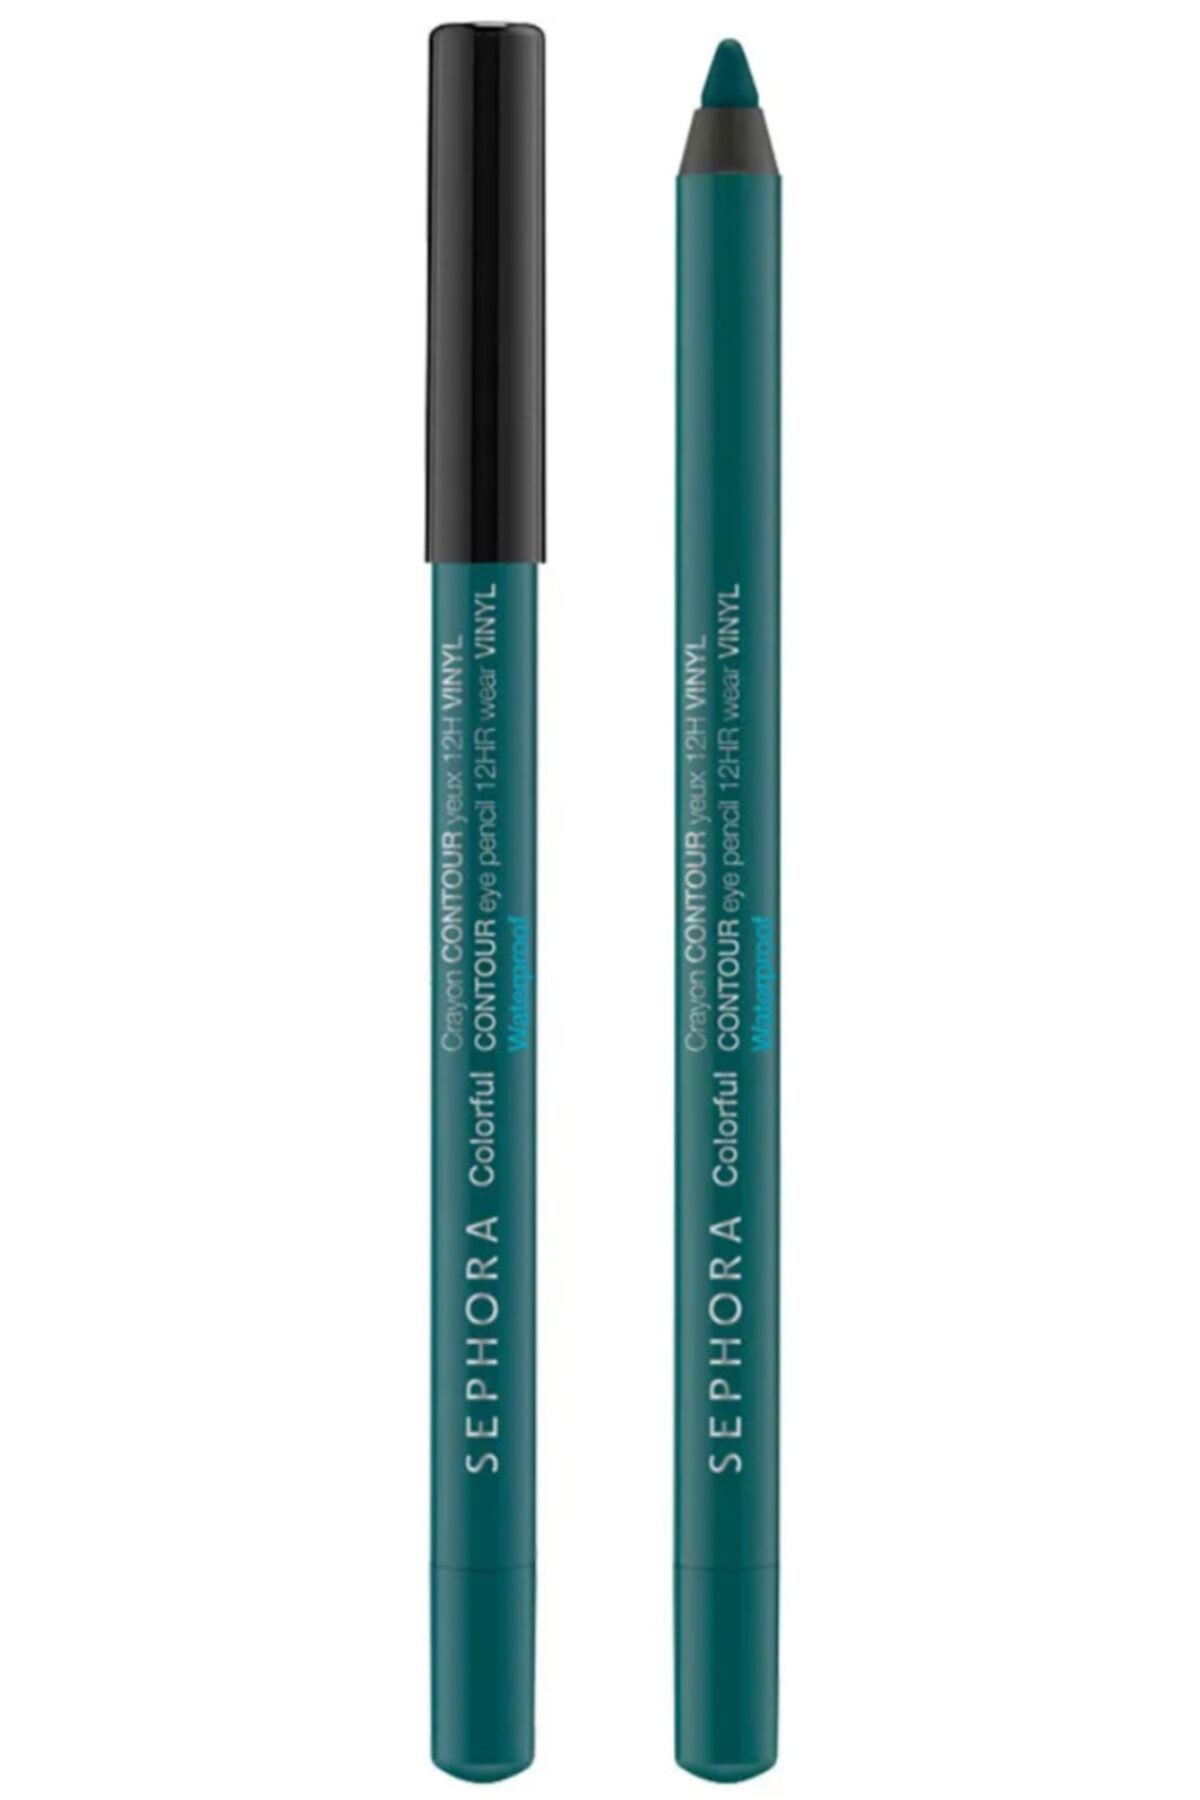 Sephora 12 Hour Contour Pencil Eyeliner